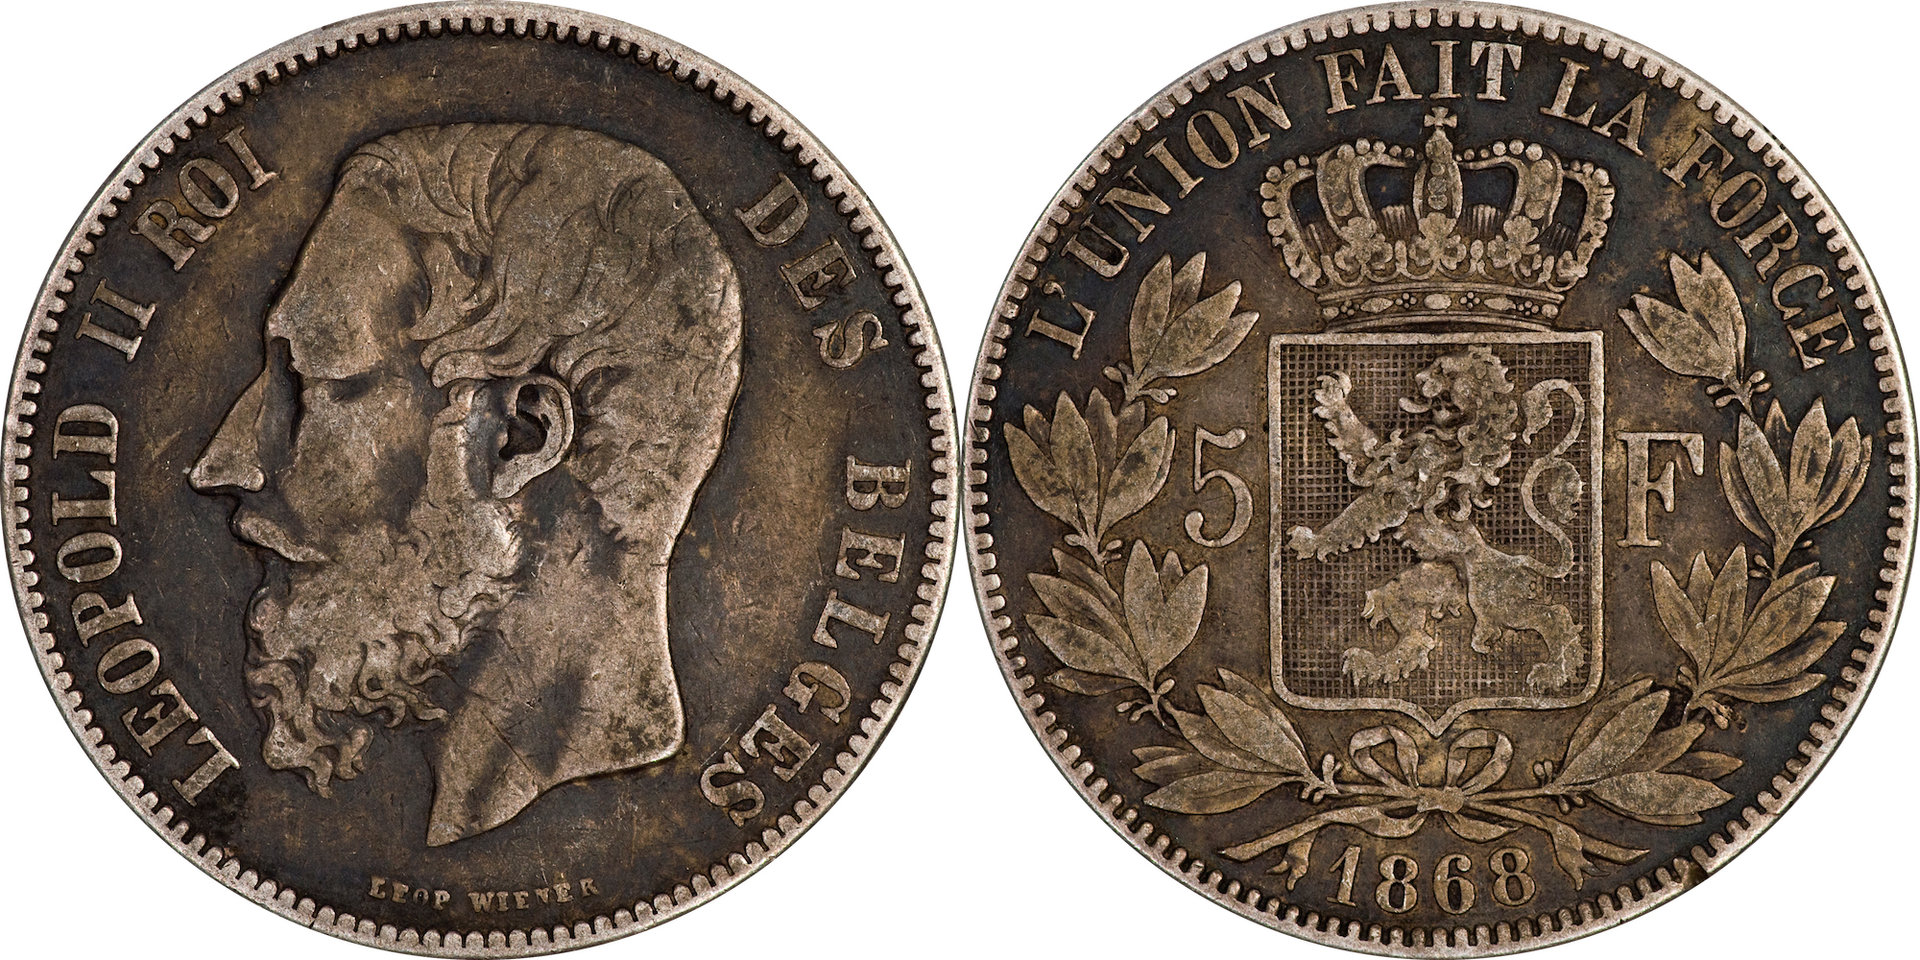 Belgium - 1868 5 Francs.jpg